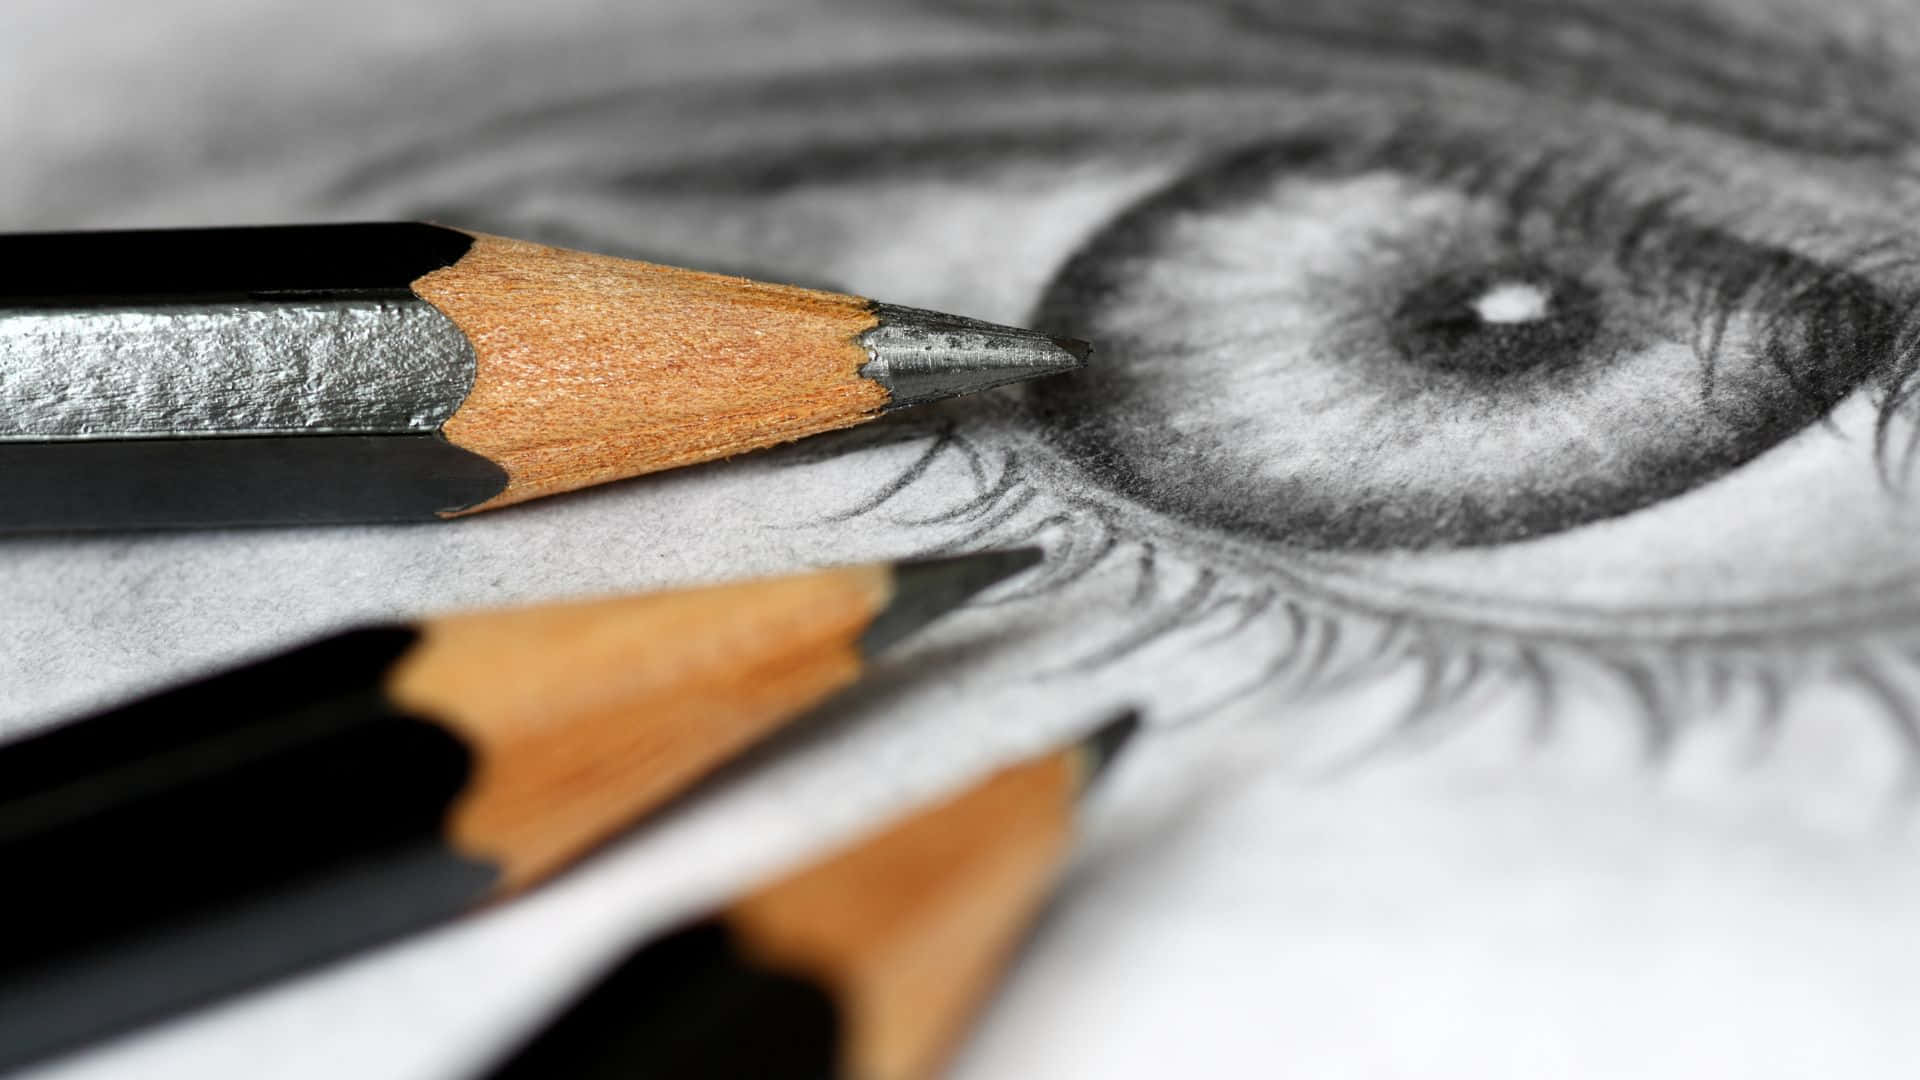 Human Eye Pencil Sketch Illustration Wallpaper